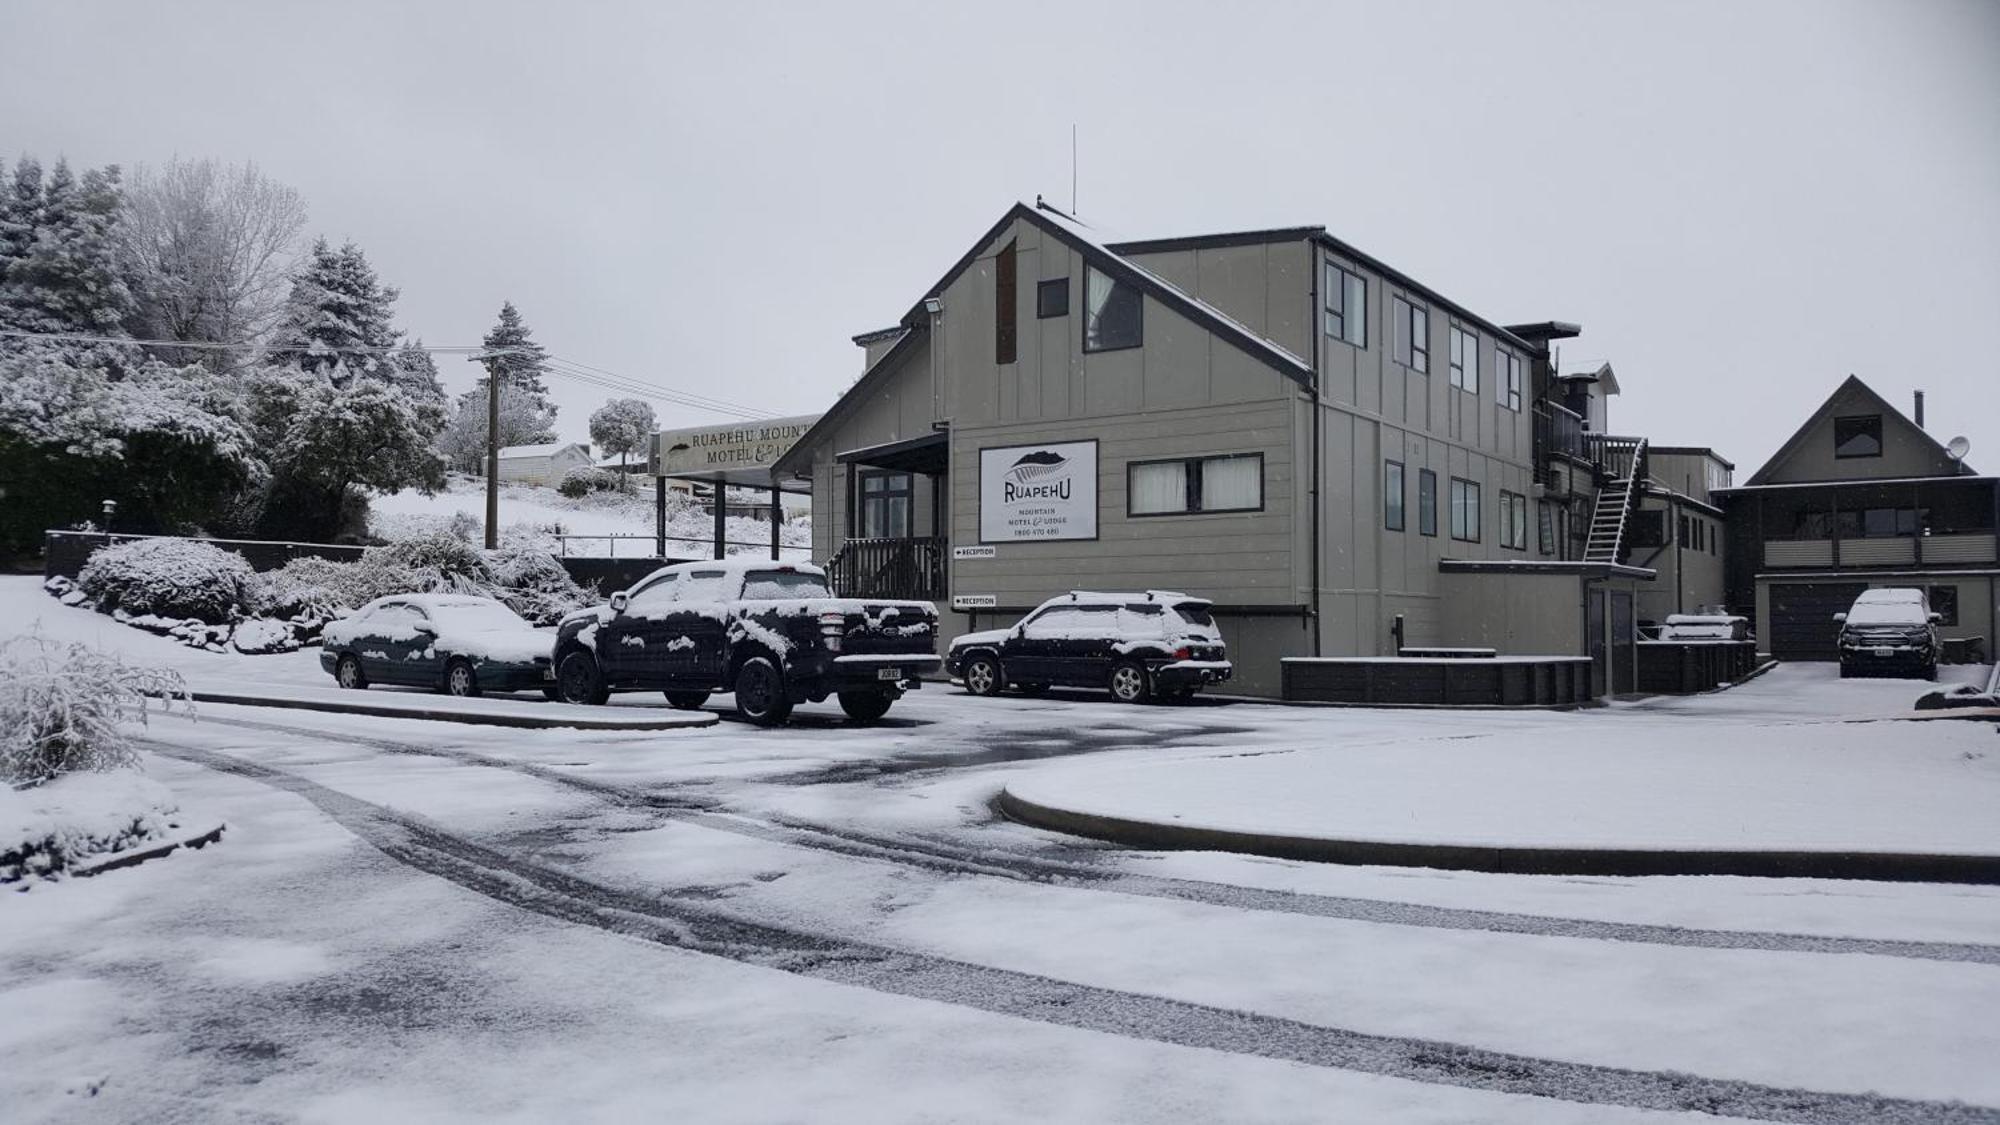 Ruapehu Mountain Motel&Lodge Ohakune Extérieur photo